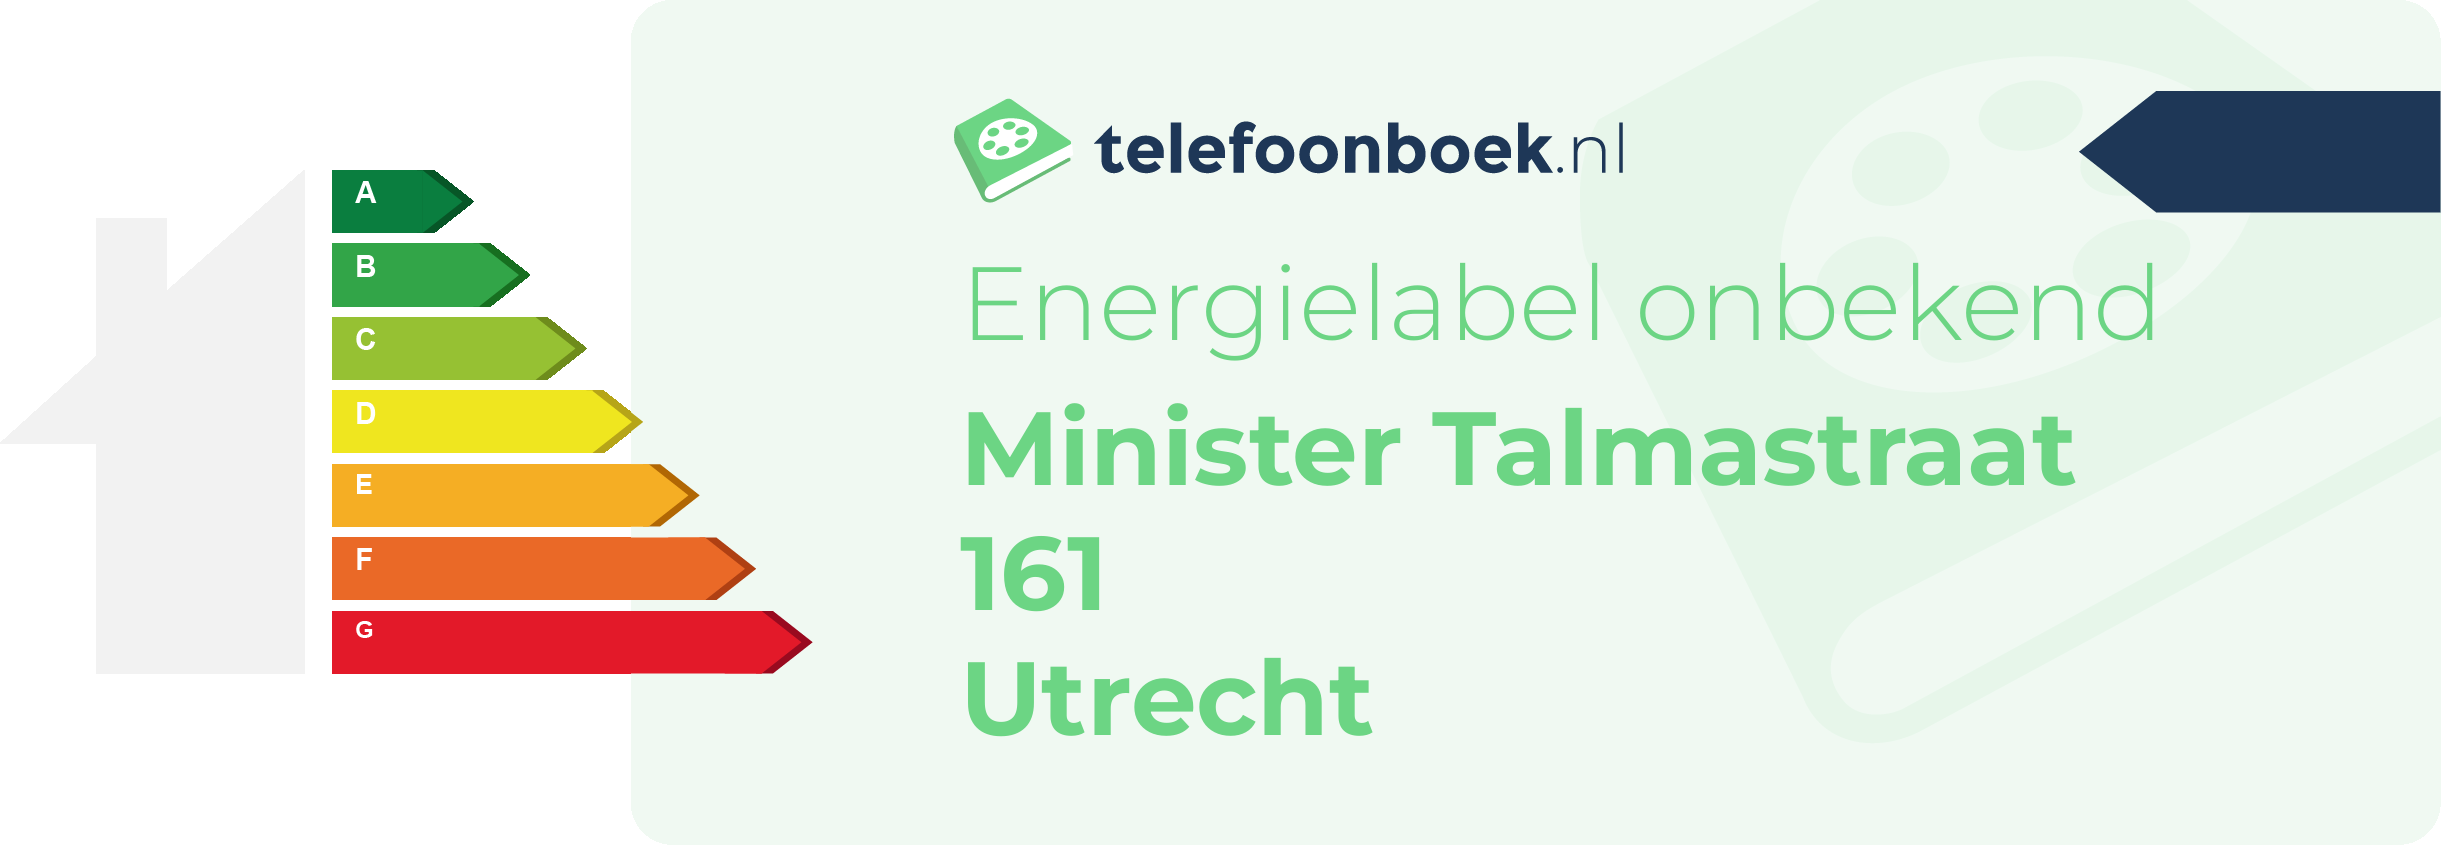 Energielabel Minister Talmastraat 161 Utrecht